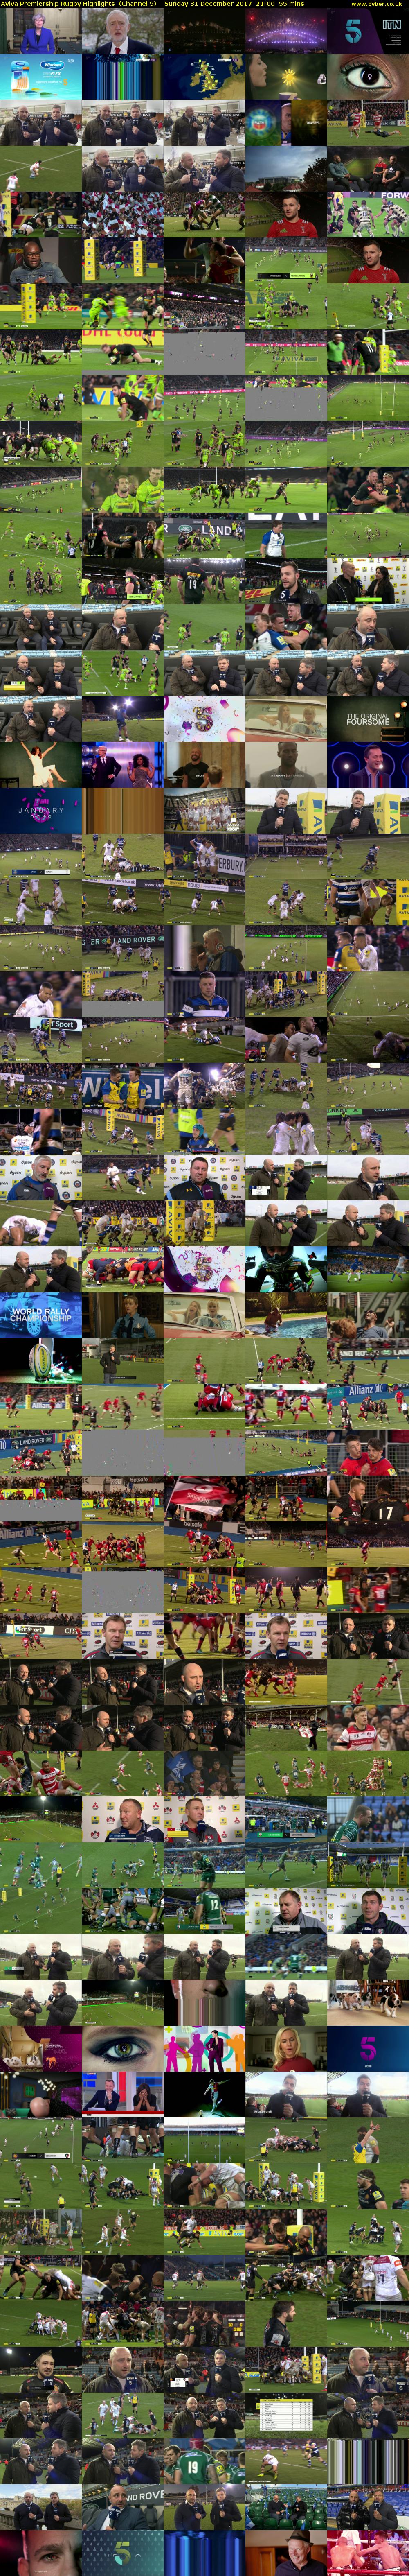 Aviva Premiership Rugby Highlights  (Channel 5) Sunday 31 December 2017 21:00 - 21:55